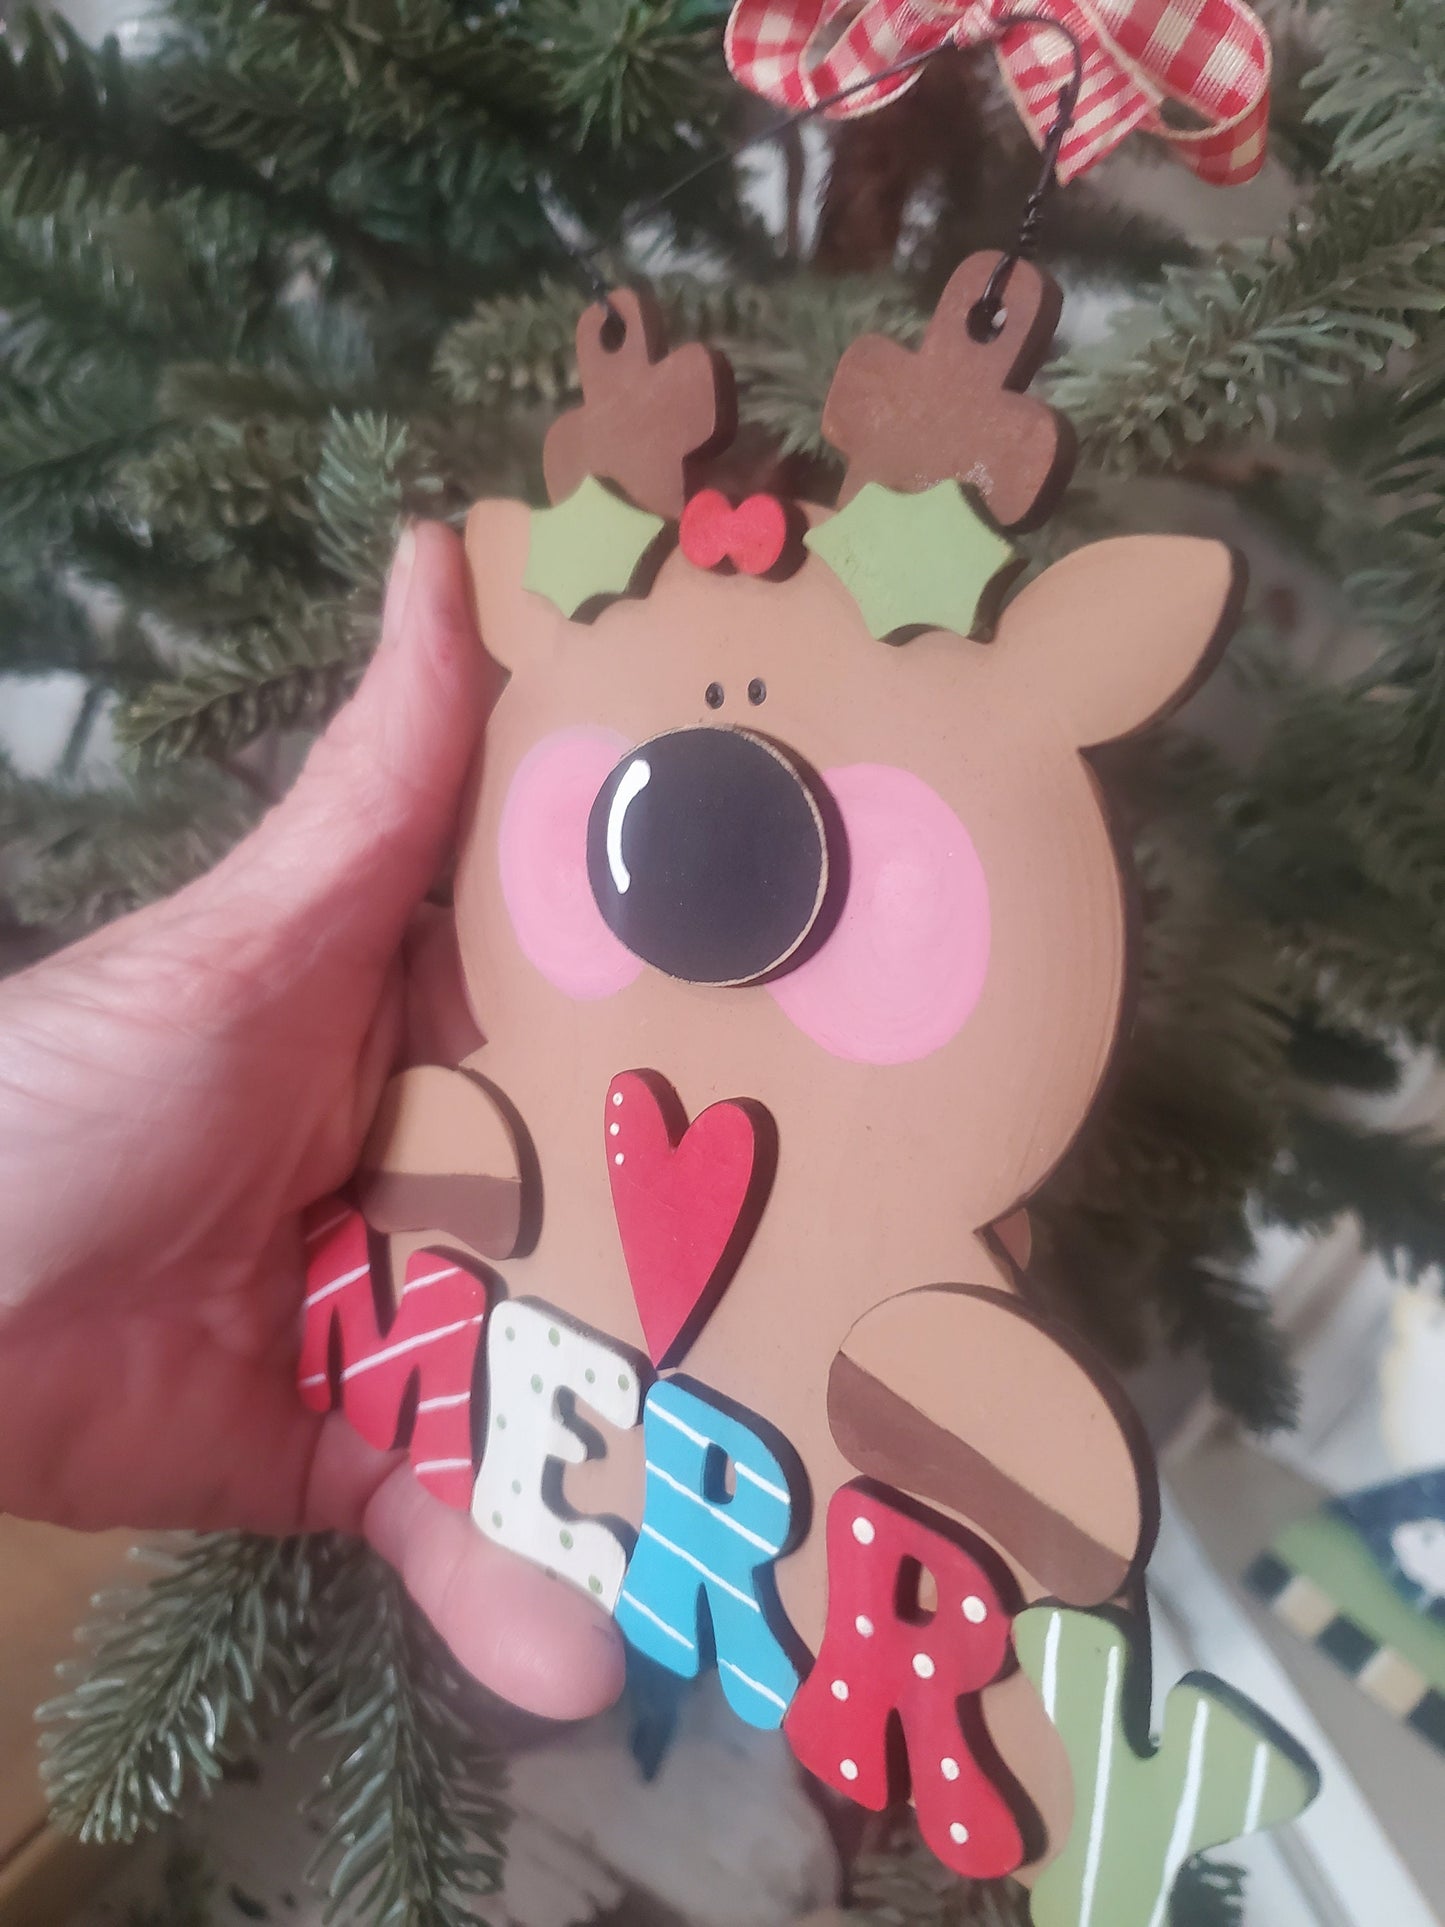 Merry Reindeer SVG| Laser Cut Reindeer Ornament| Glow forge|Christmas Ornament SVG